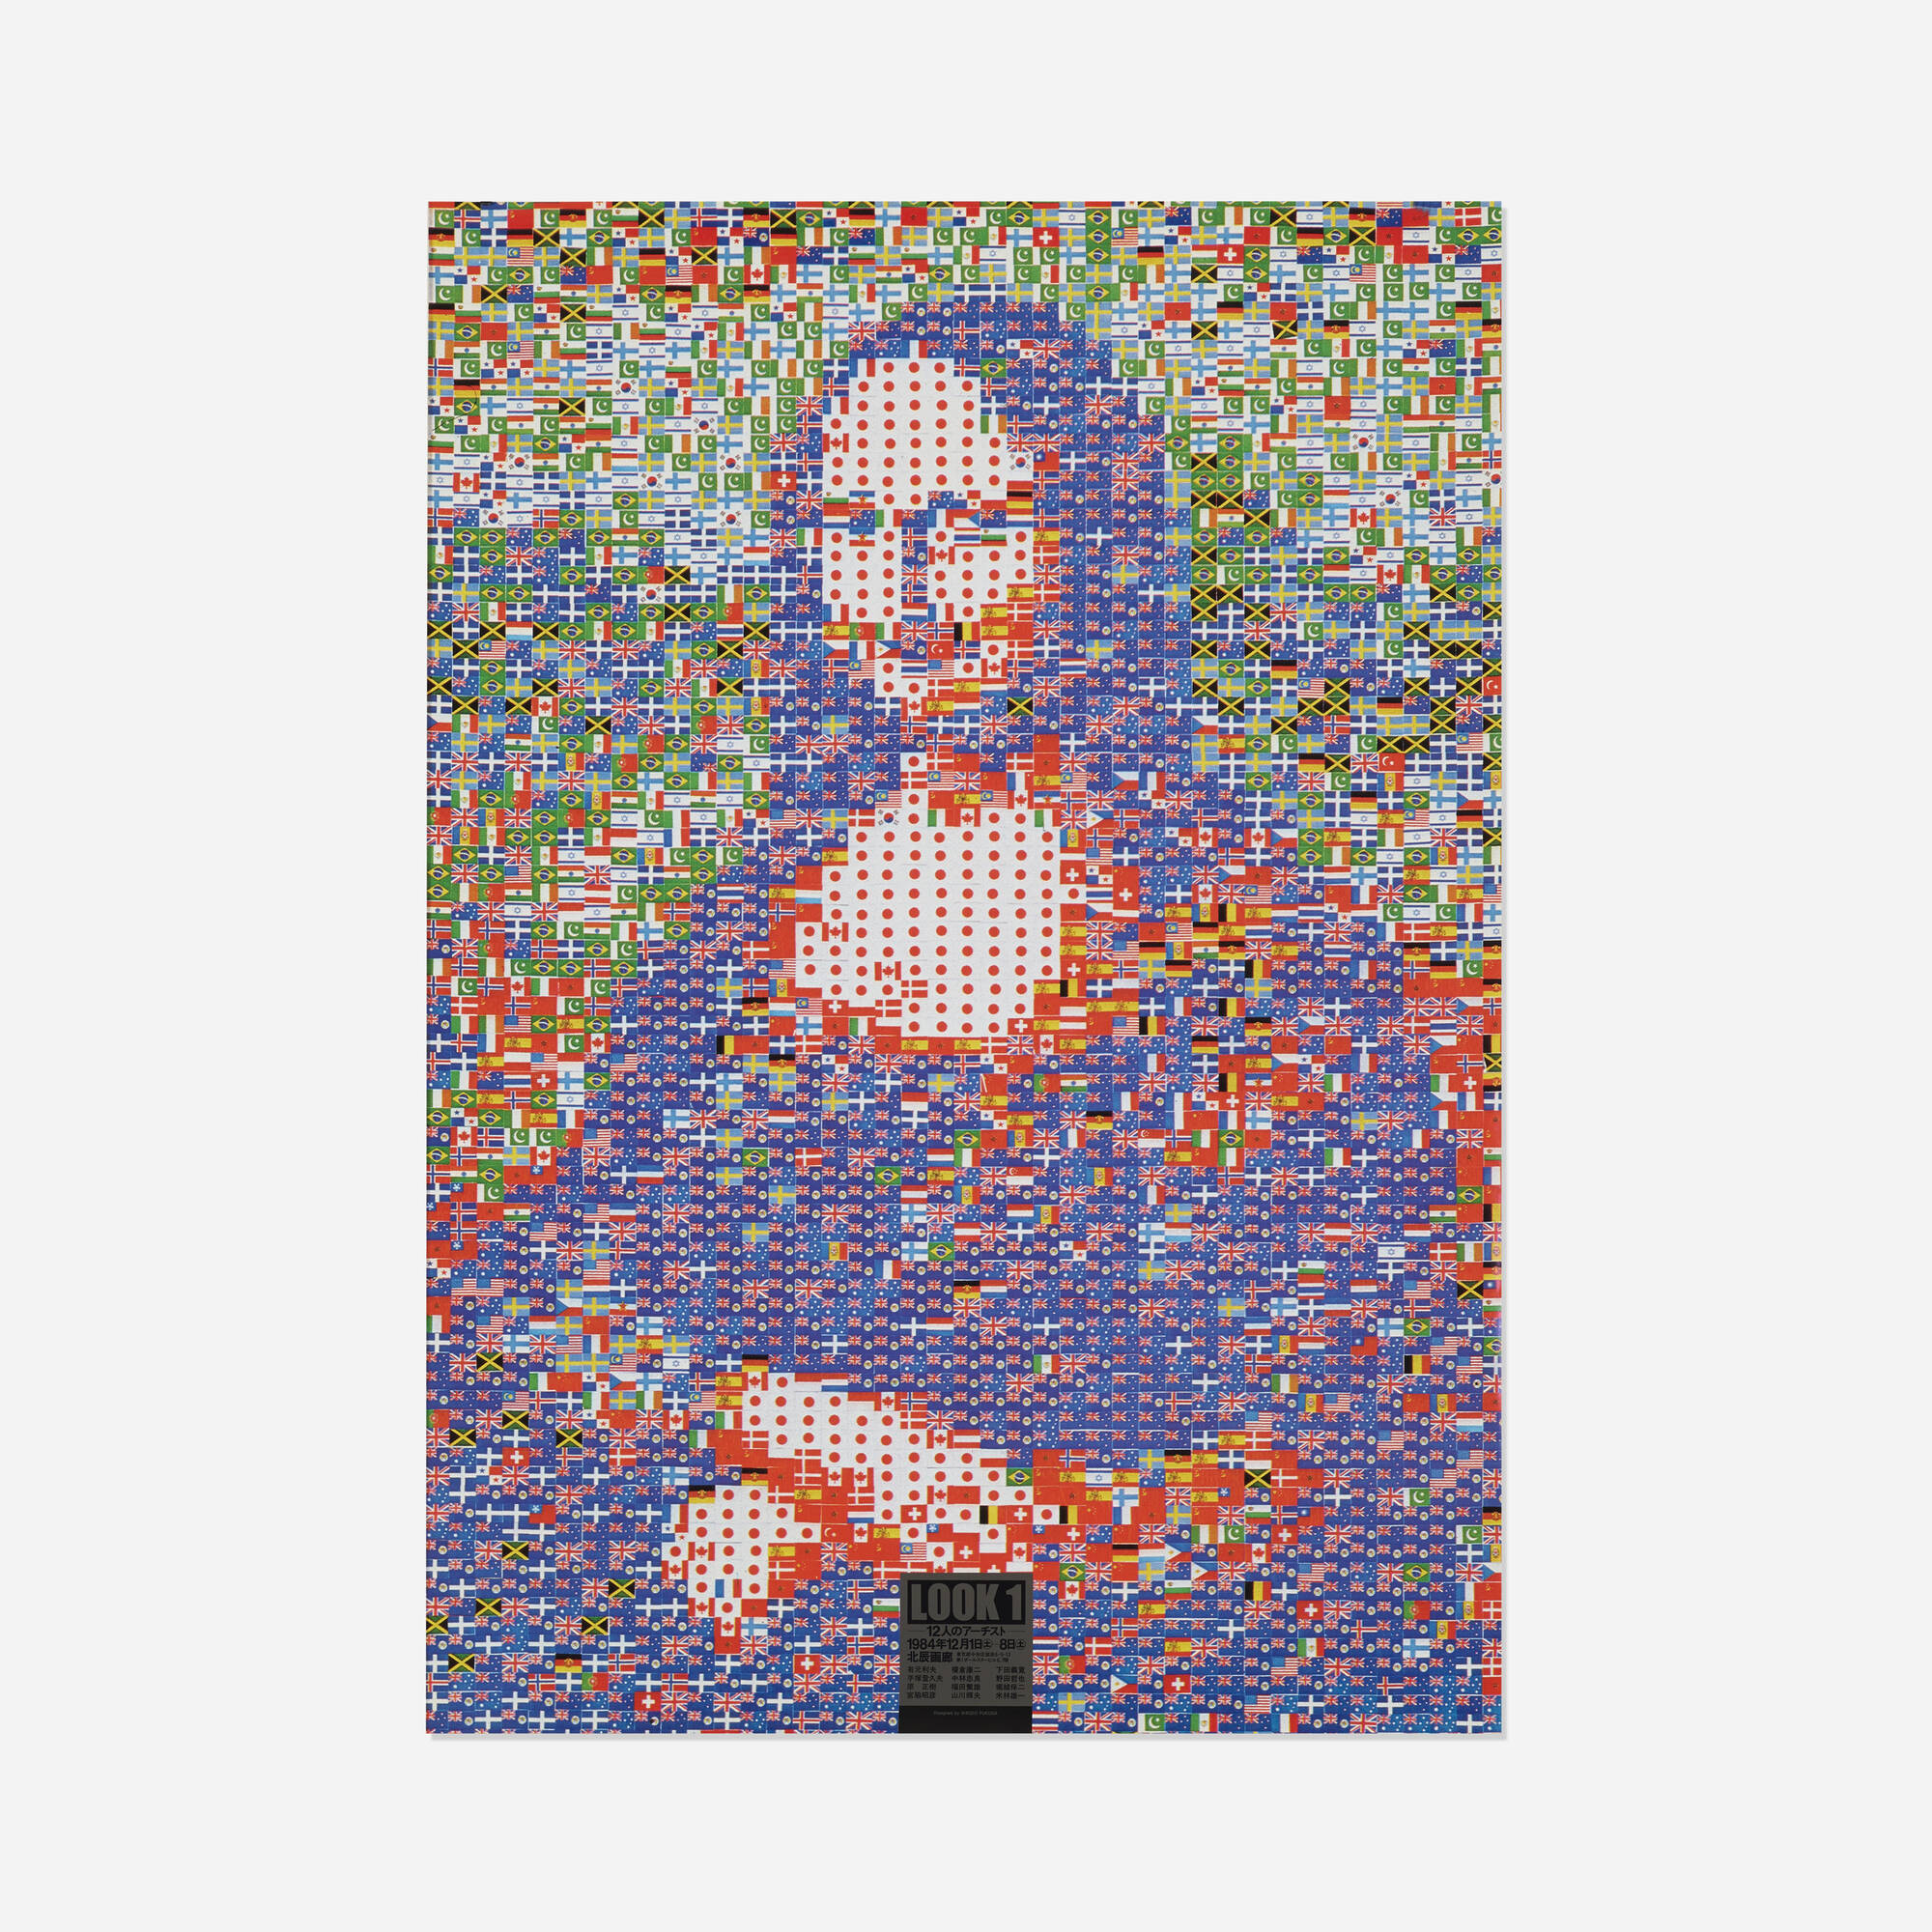 248: SHIGEO FUKUDA, Look 1 (Mona Lisa) poster < Paul Rand: The Art 